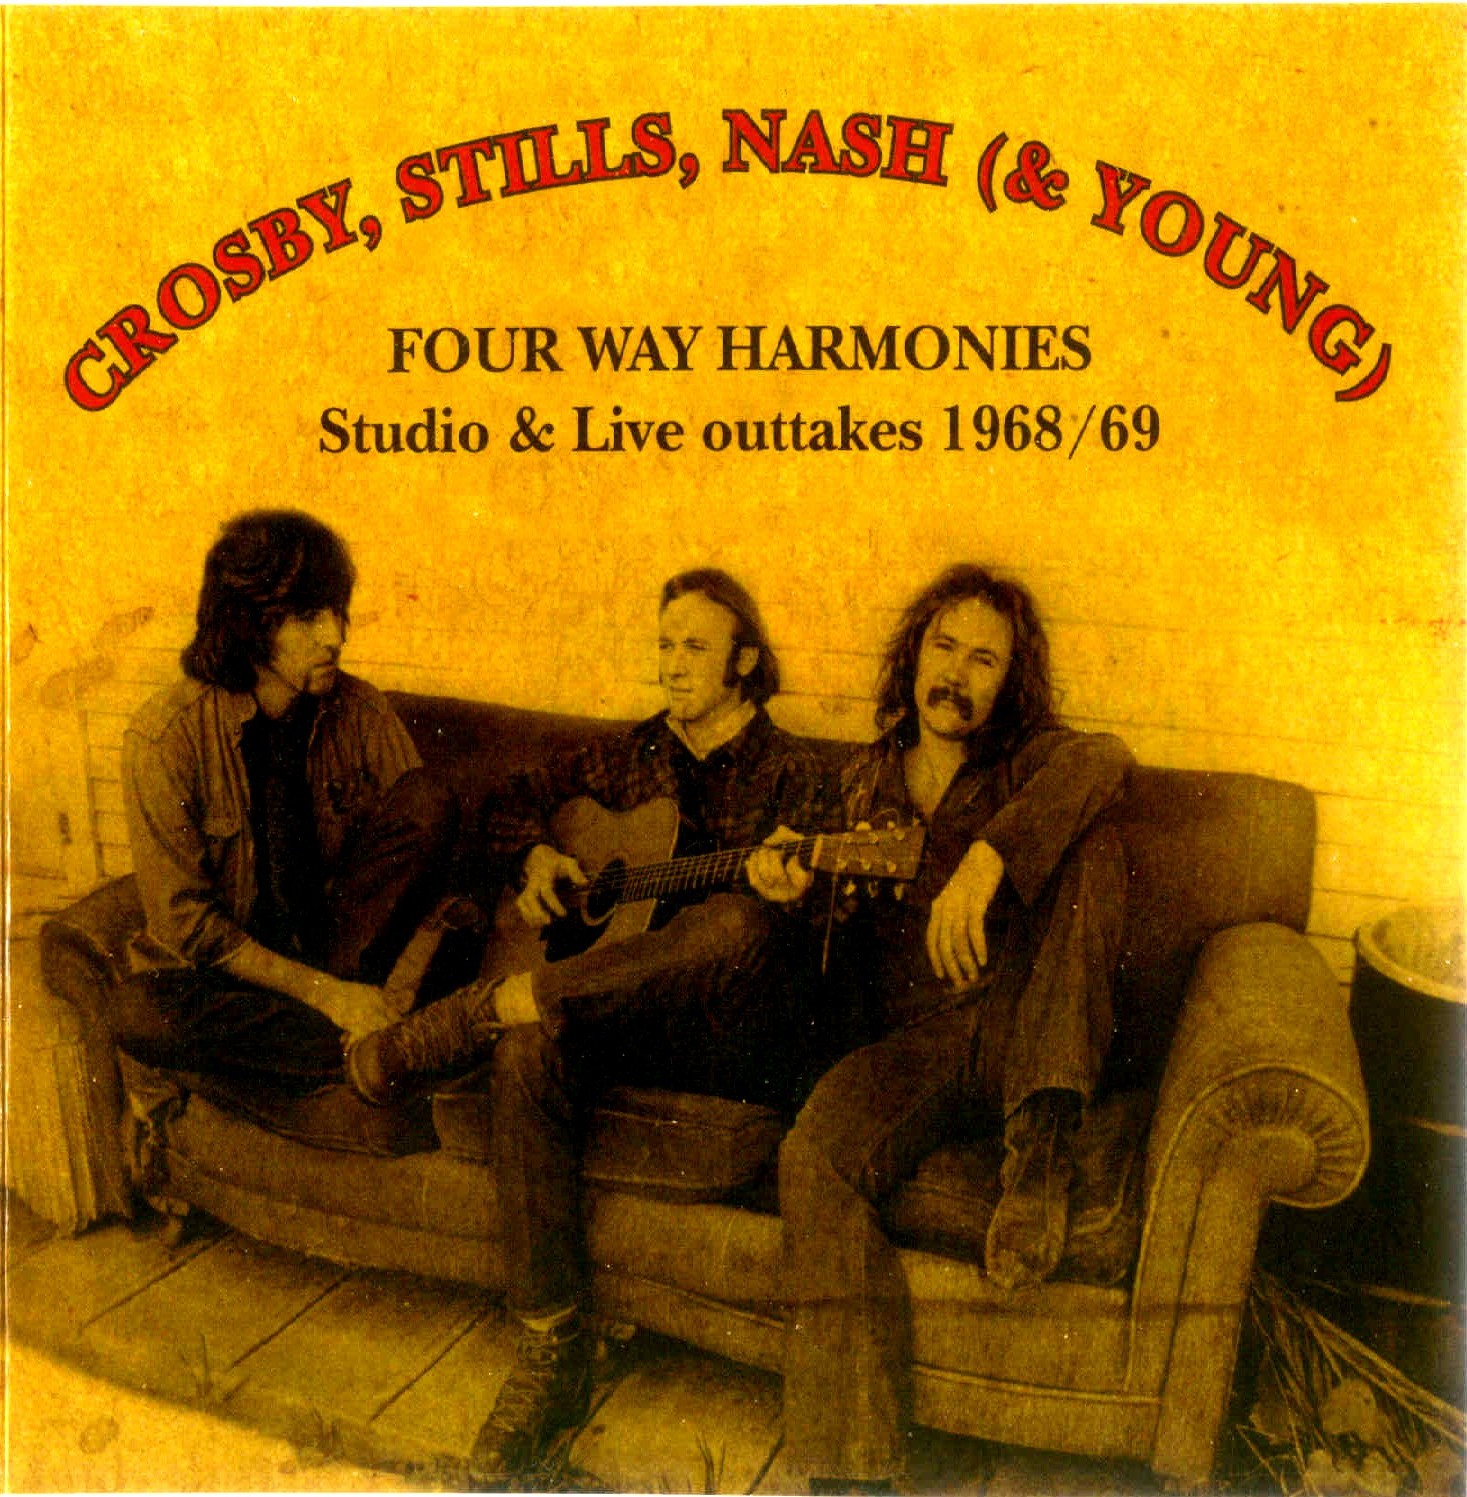 CrosbyStillsNashYoung1968-1969FourWayHarmoniesCompilation (1).jpg